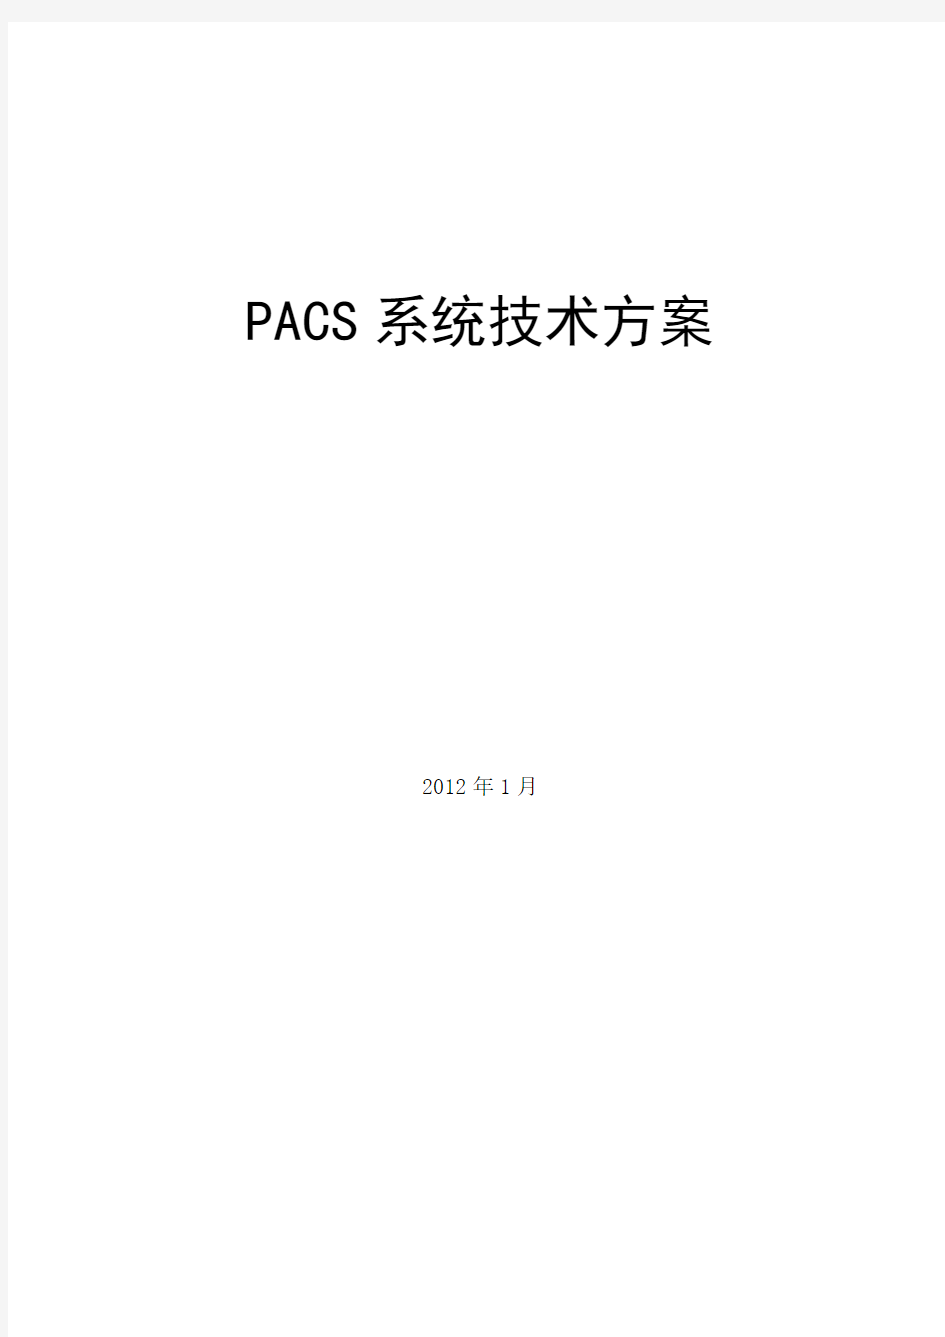 PACS系统建设方案书